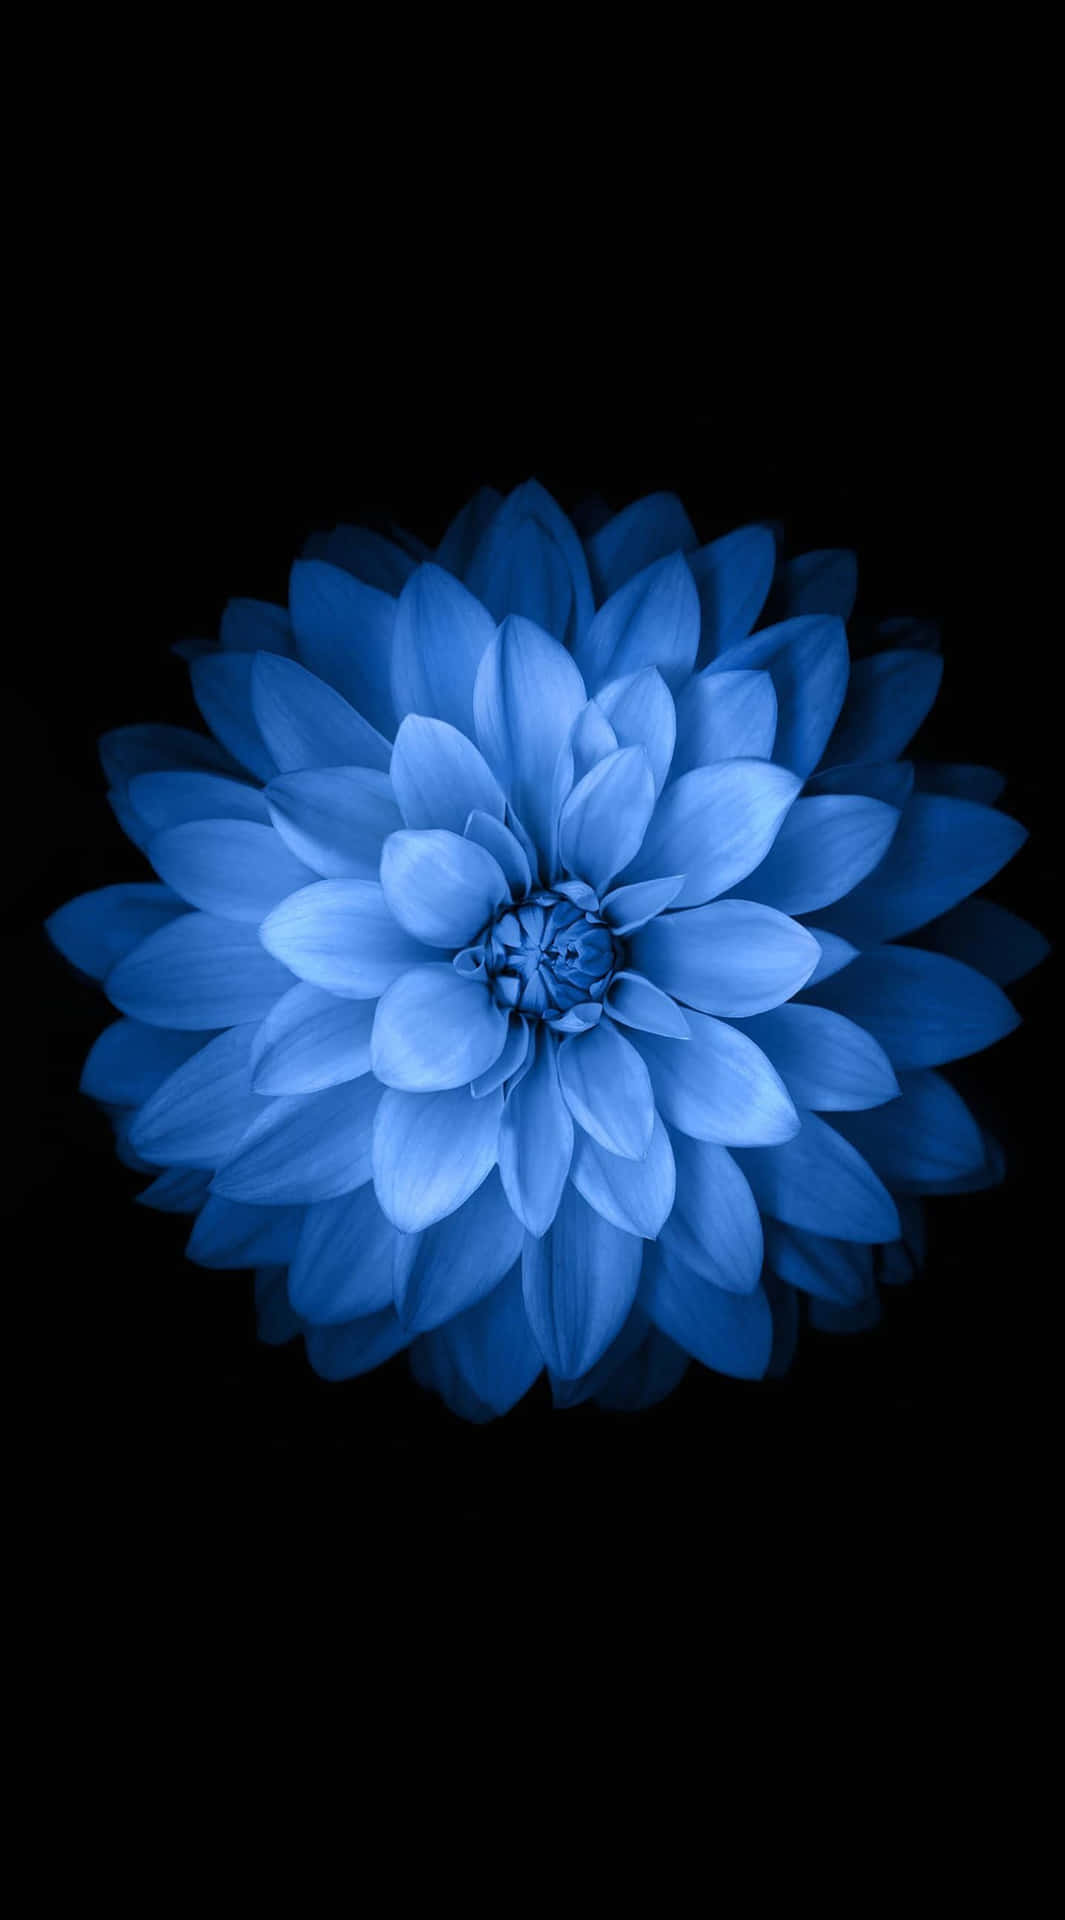 Standard Blue Flower For Iphone 6